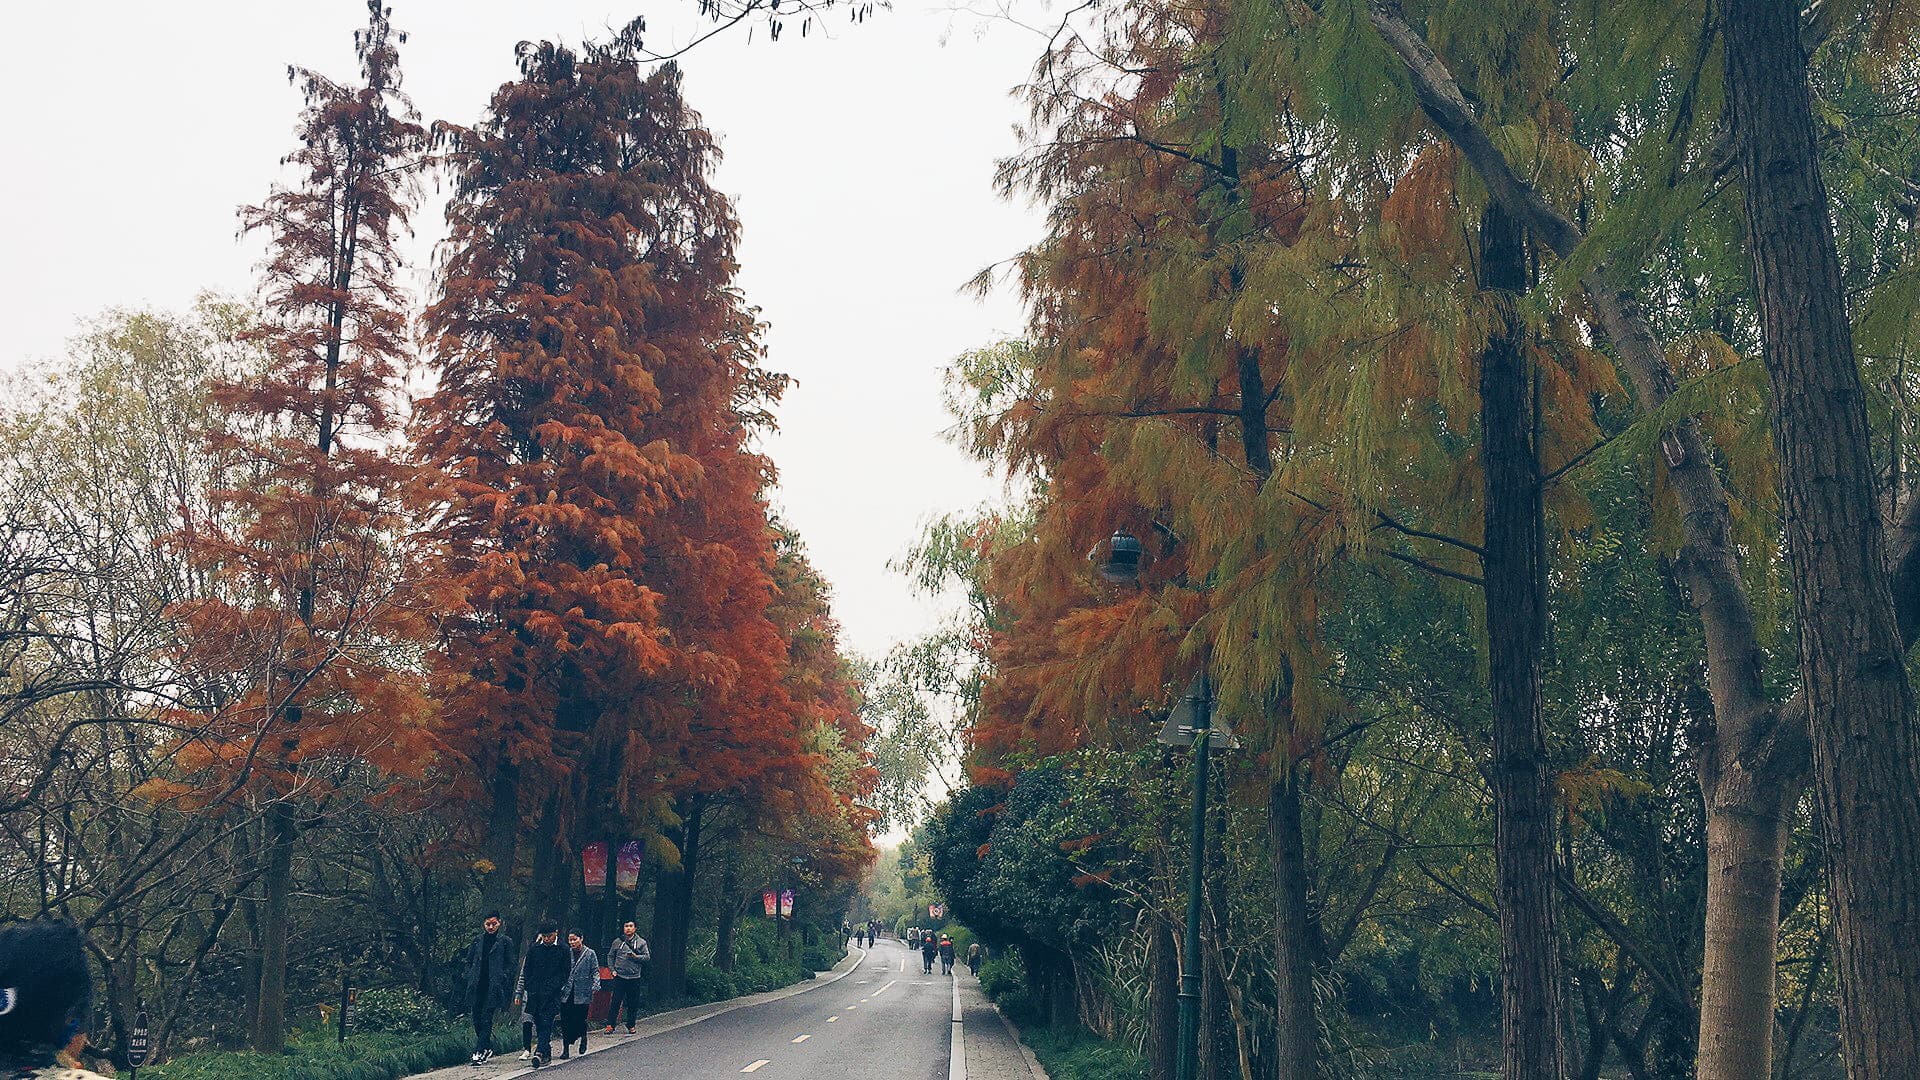 Trees in Wetland Park, Hangzhou